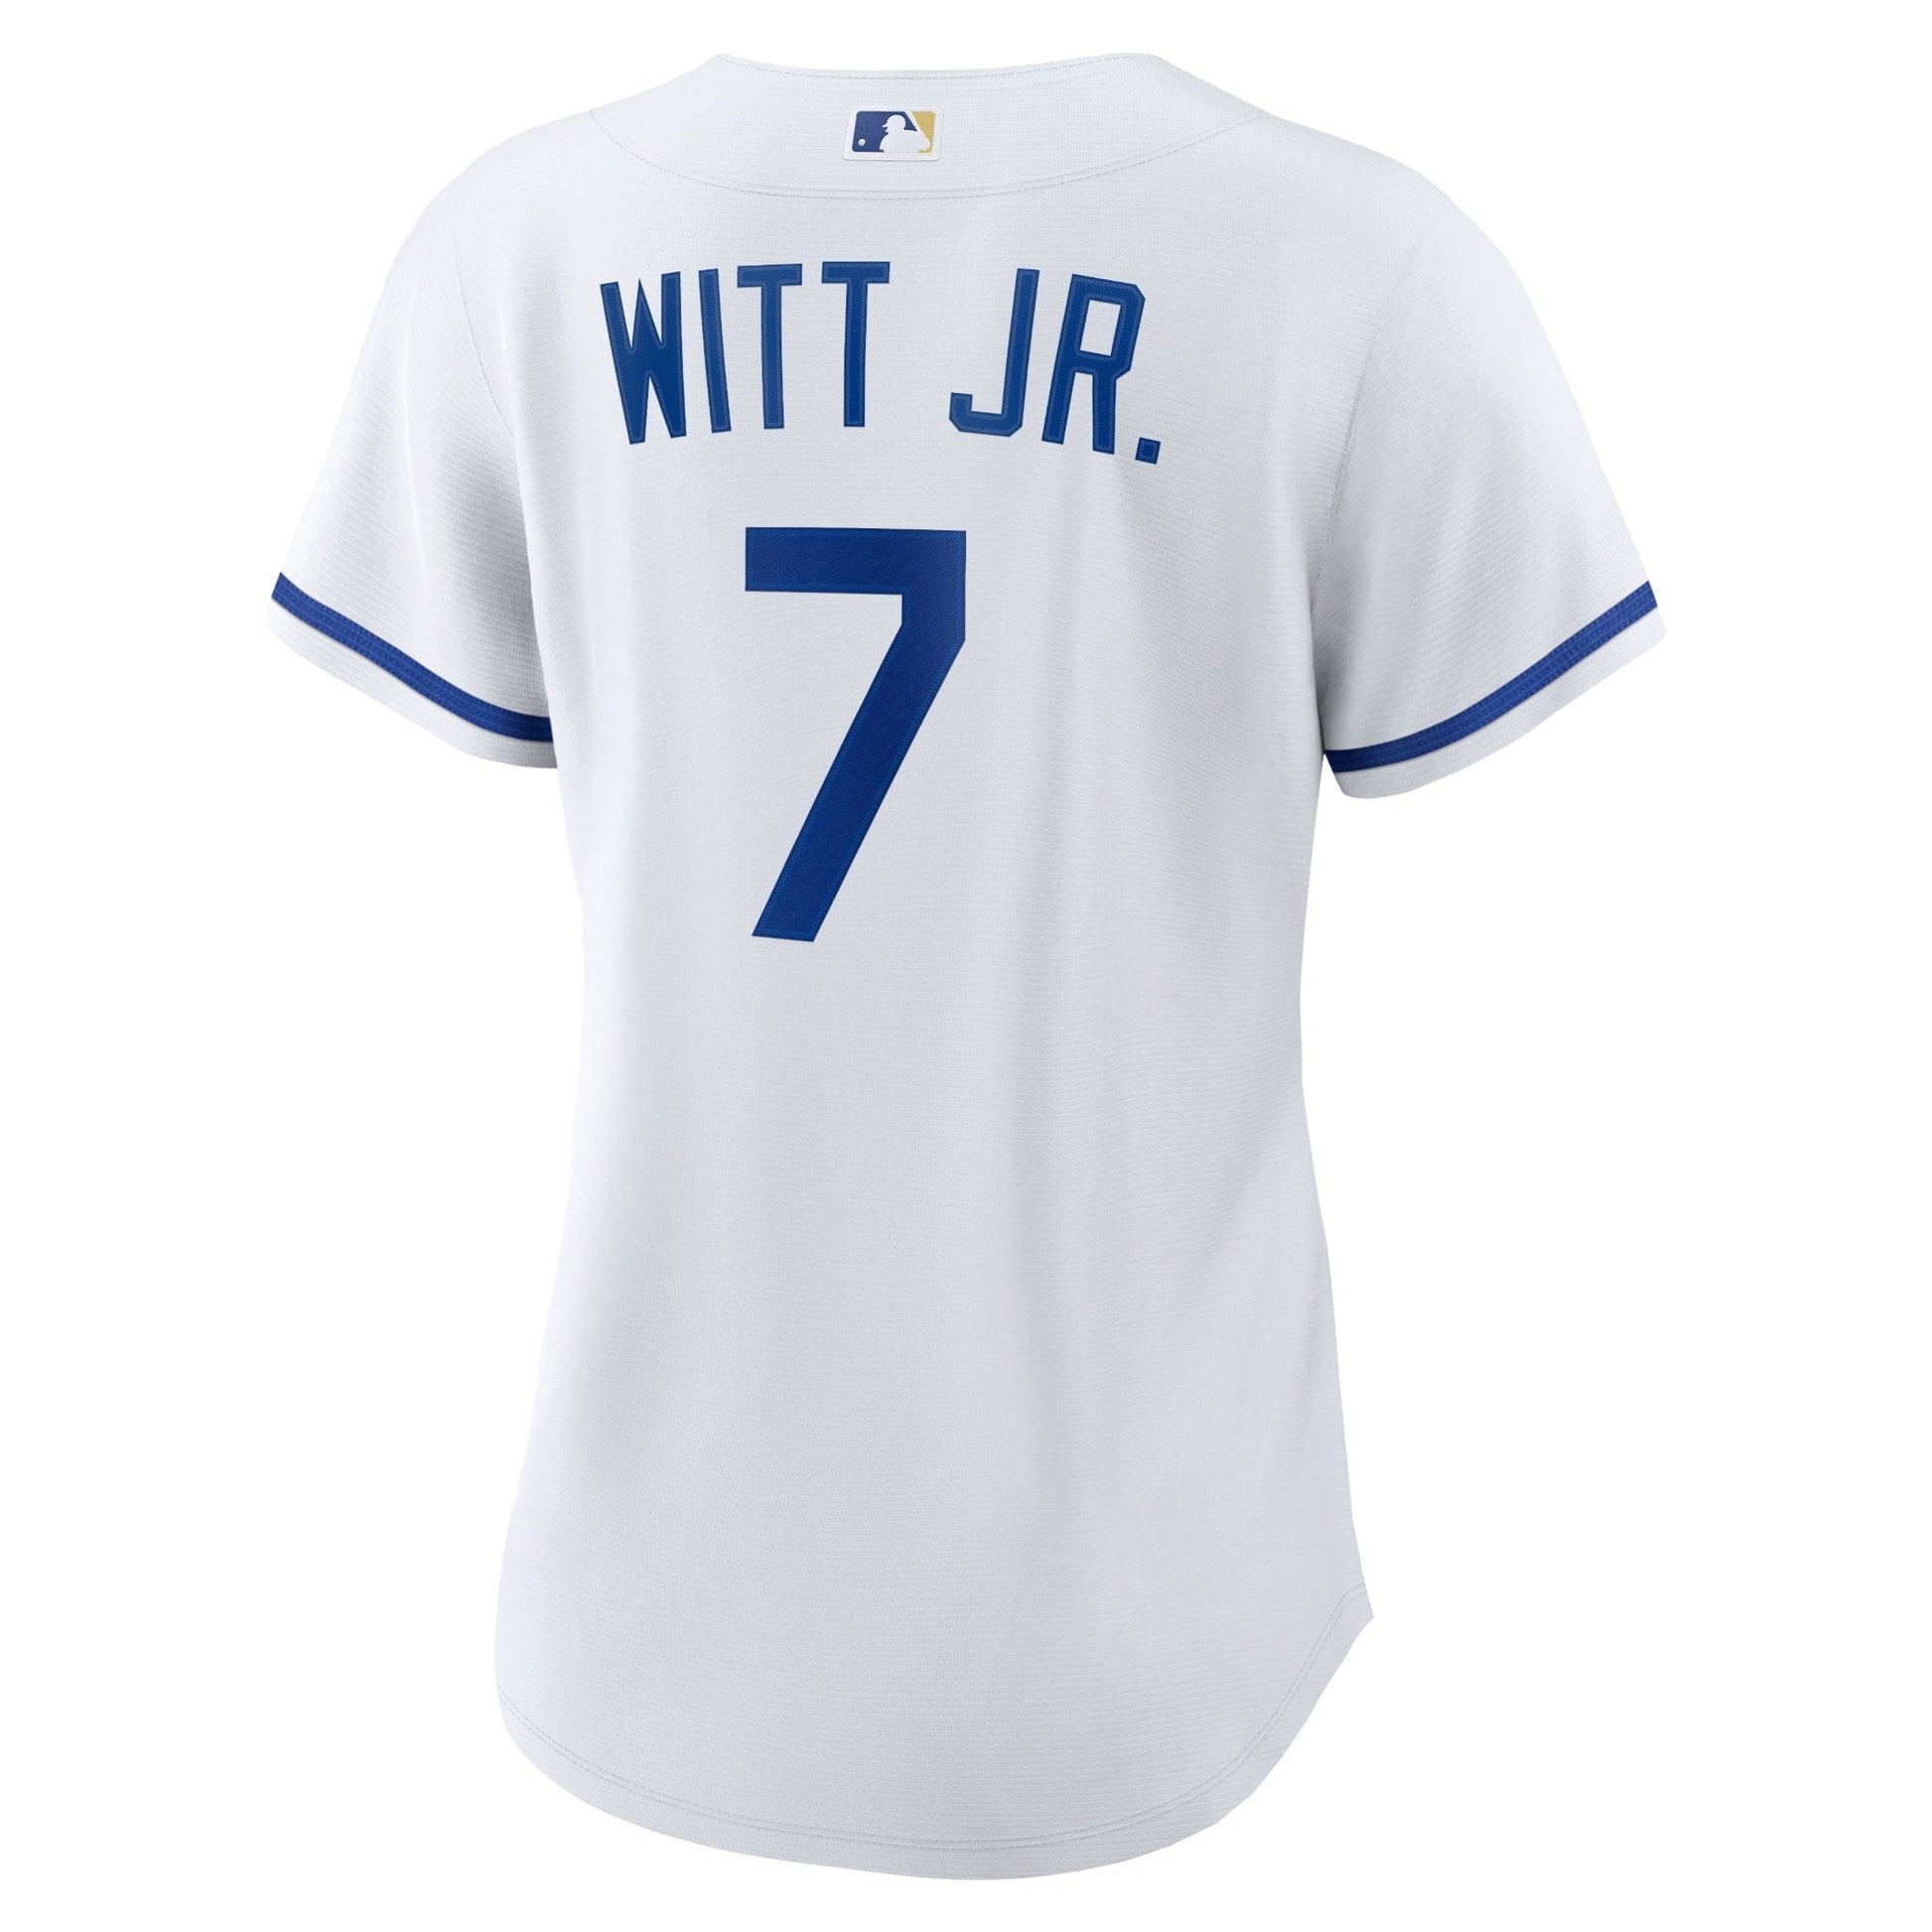 Women's Nike Bobby Witt Jr. White Kansas City Royals Home Replica Player Jersey, S